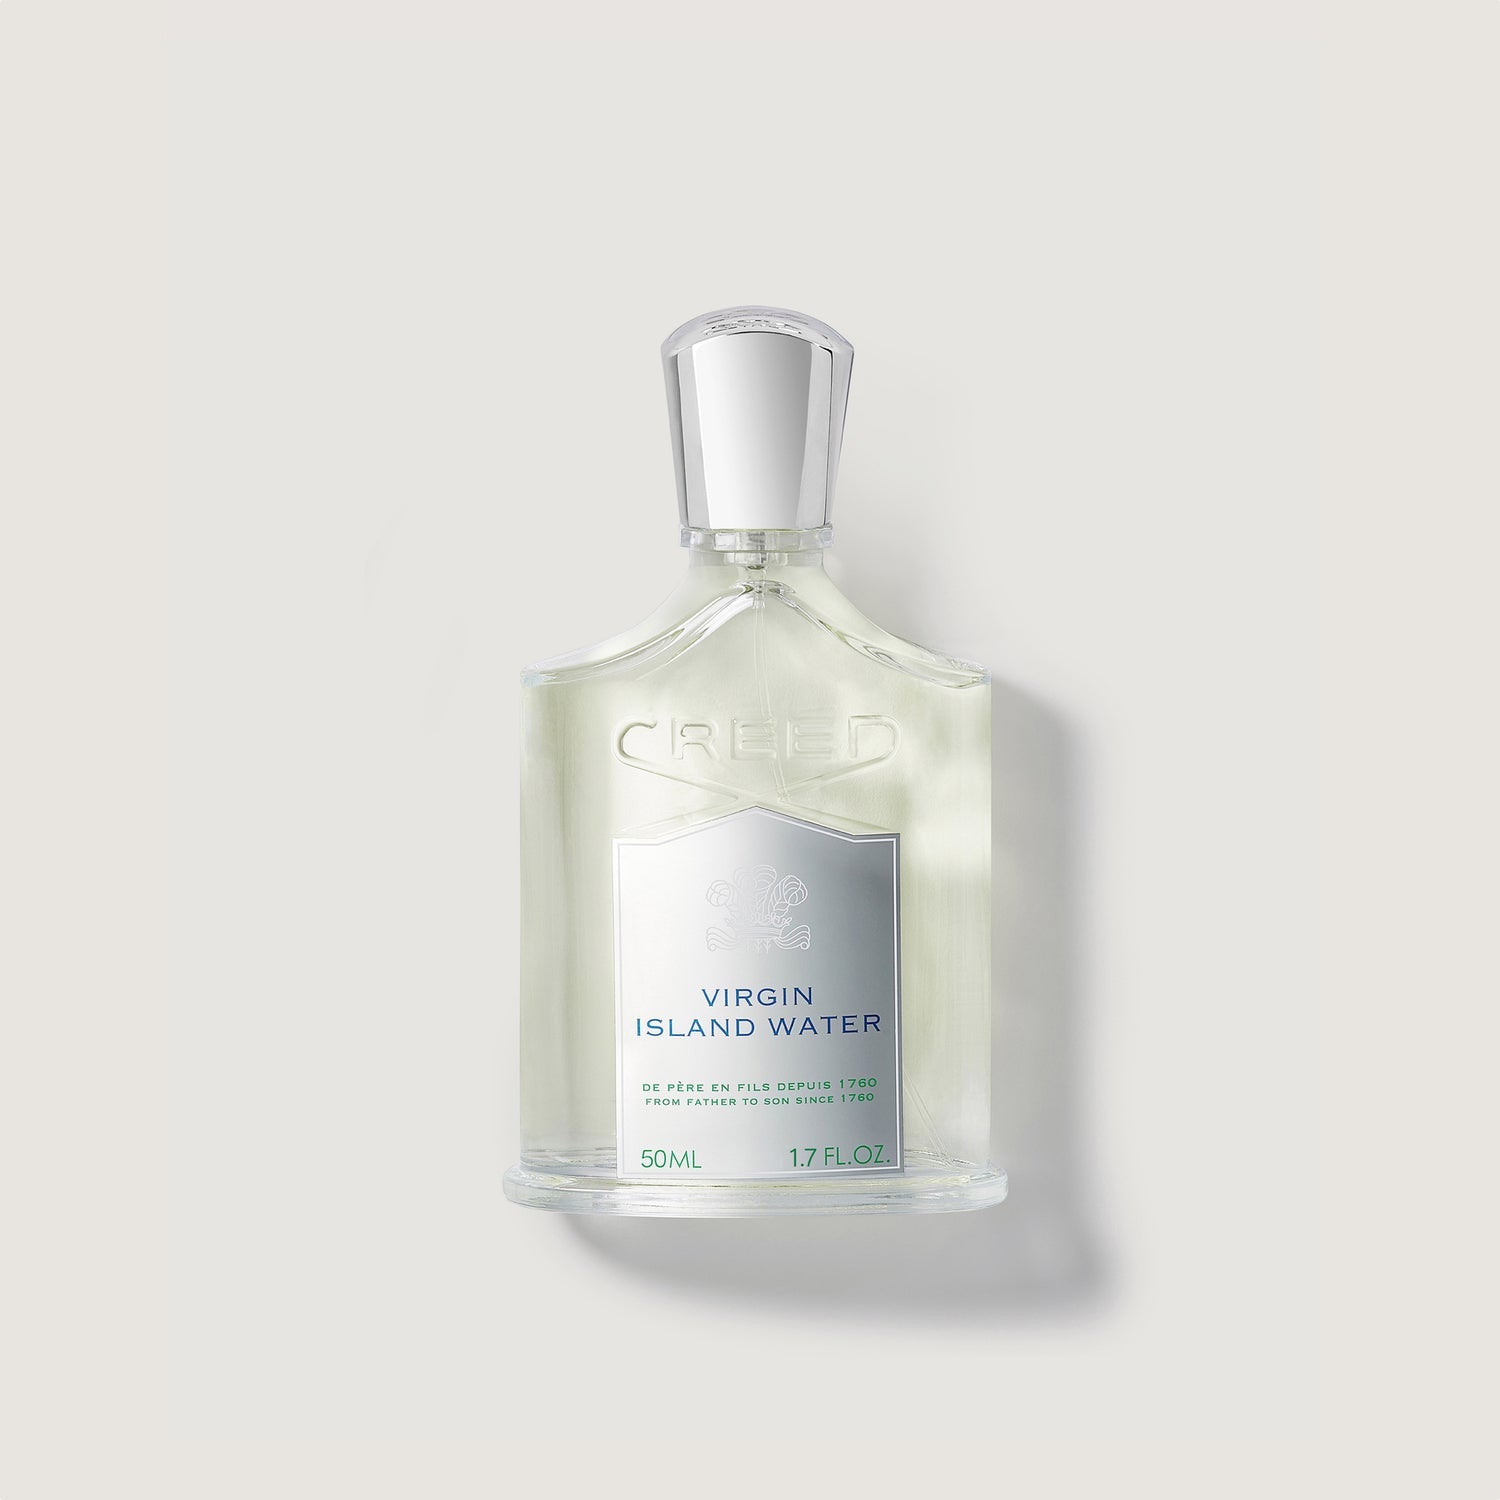 Creed Virgin Island Water Eau De Parfum Spray - 1.7 fl oz bottle